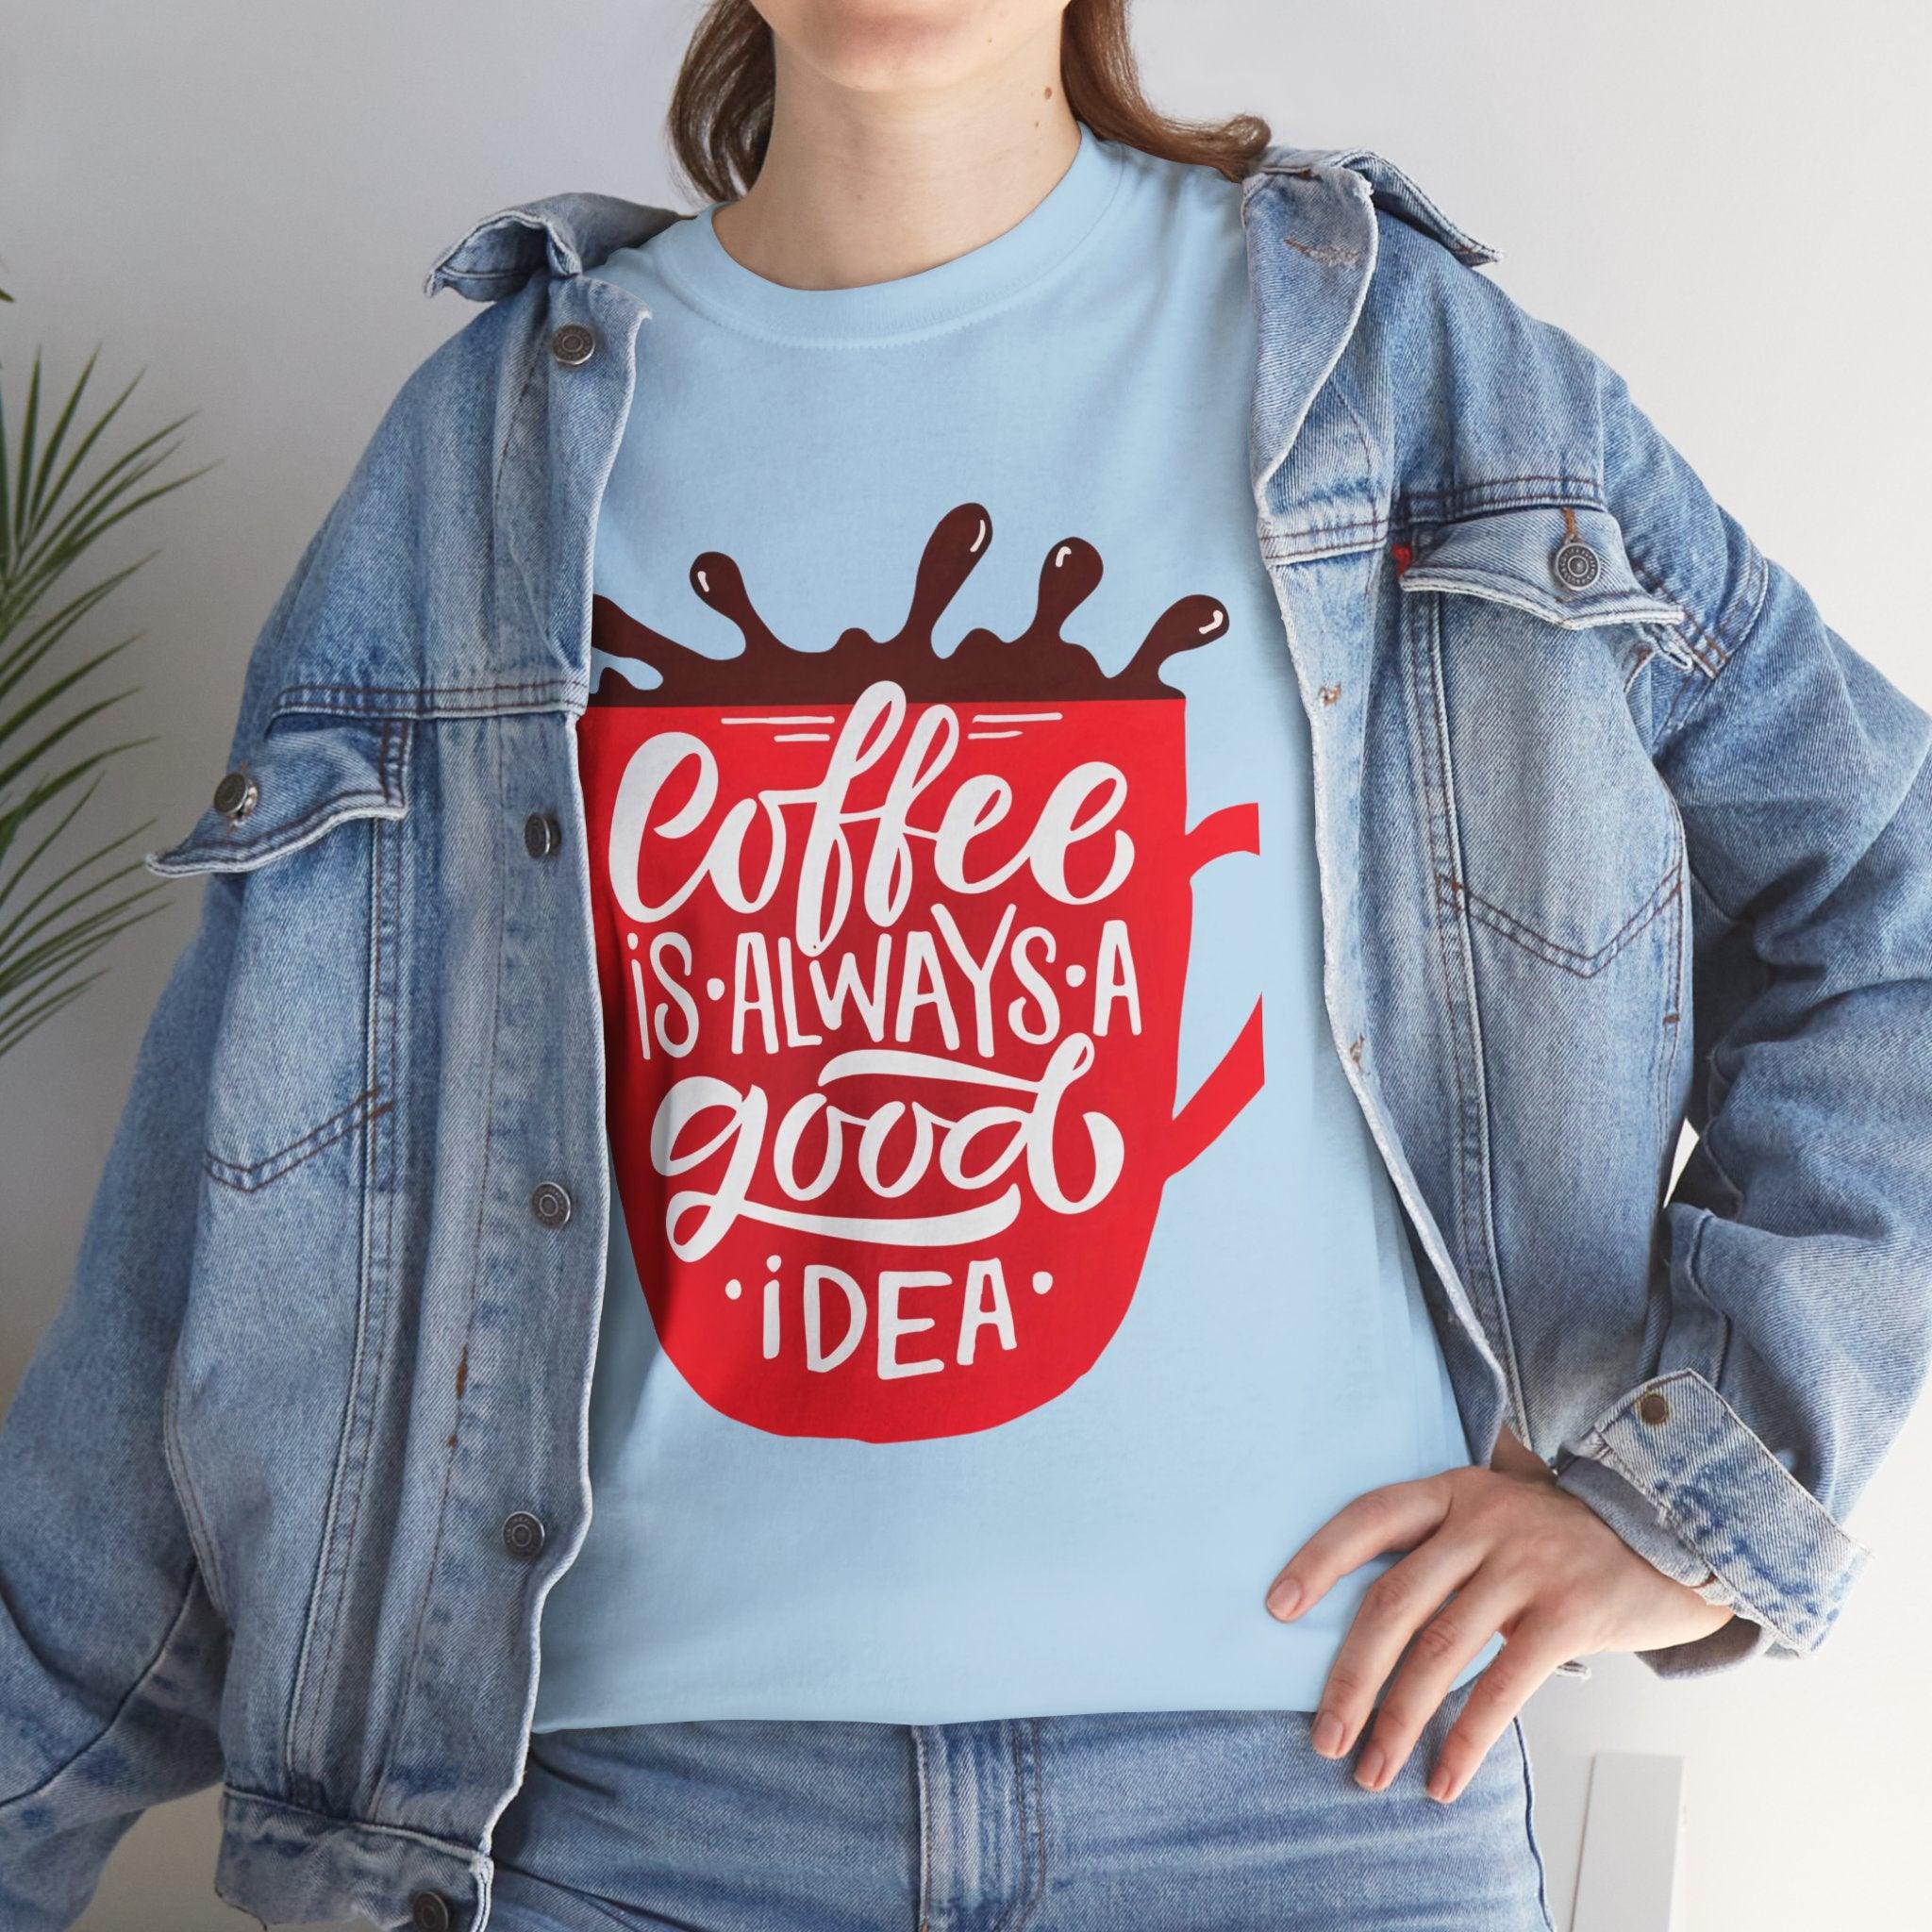 Coffee is always a good idea T-shirt - Epic Shirts 403